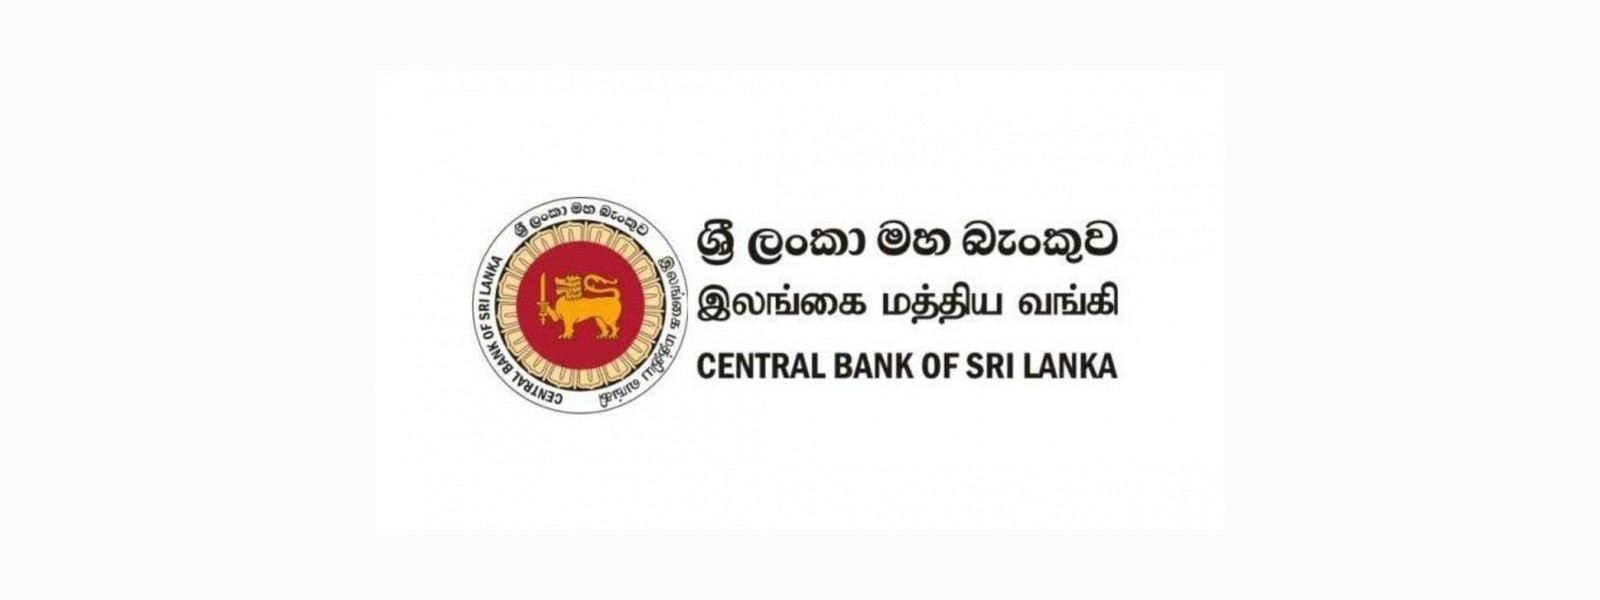 Sri Lanka exploring options for Domestic Debt Optimization